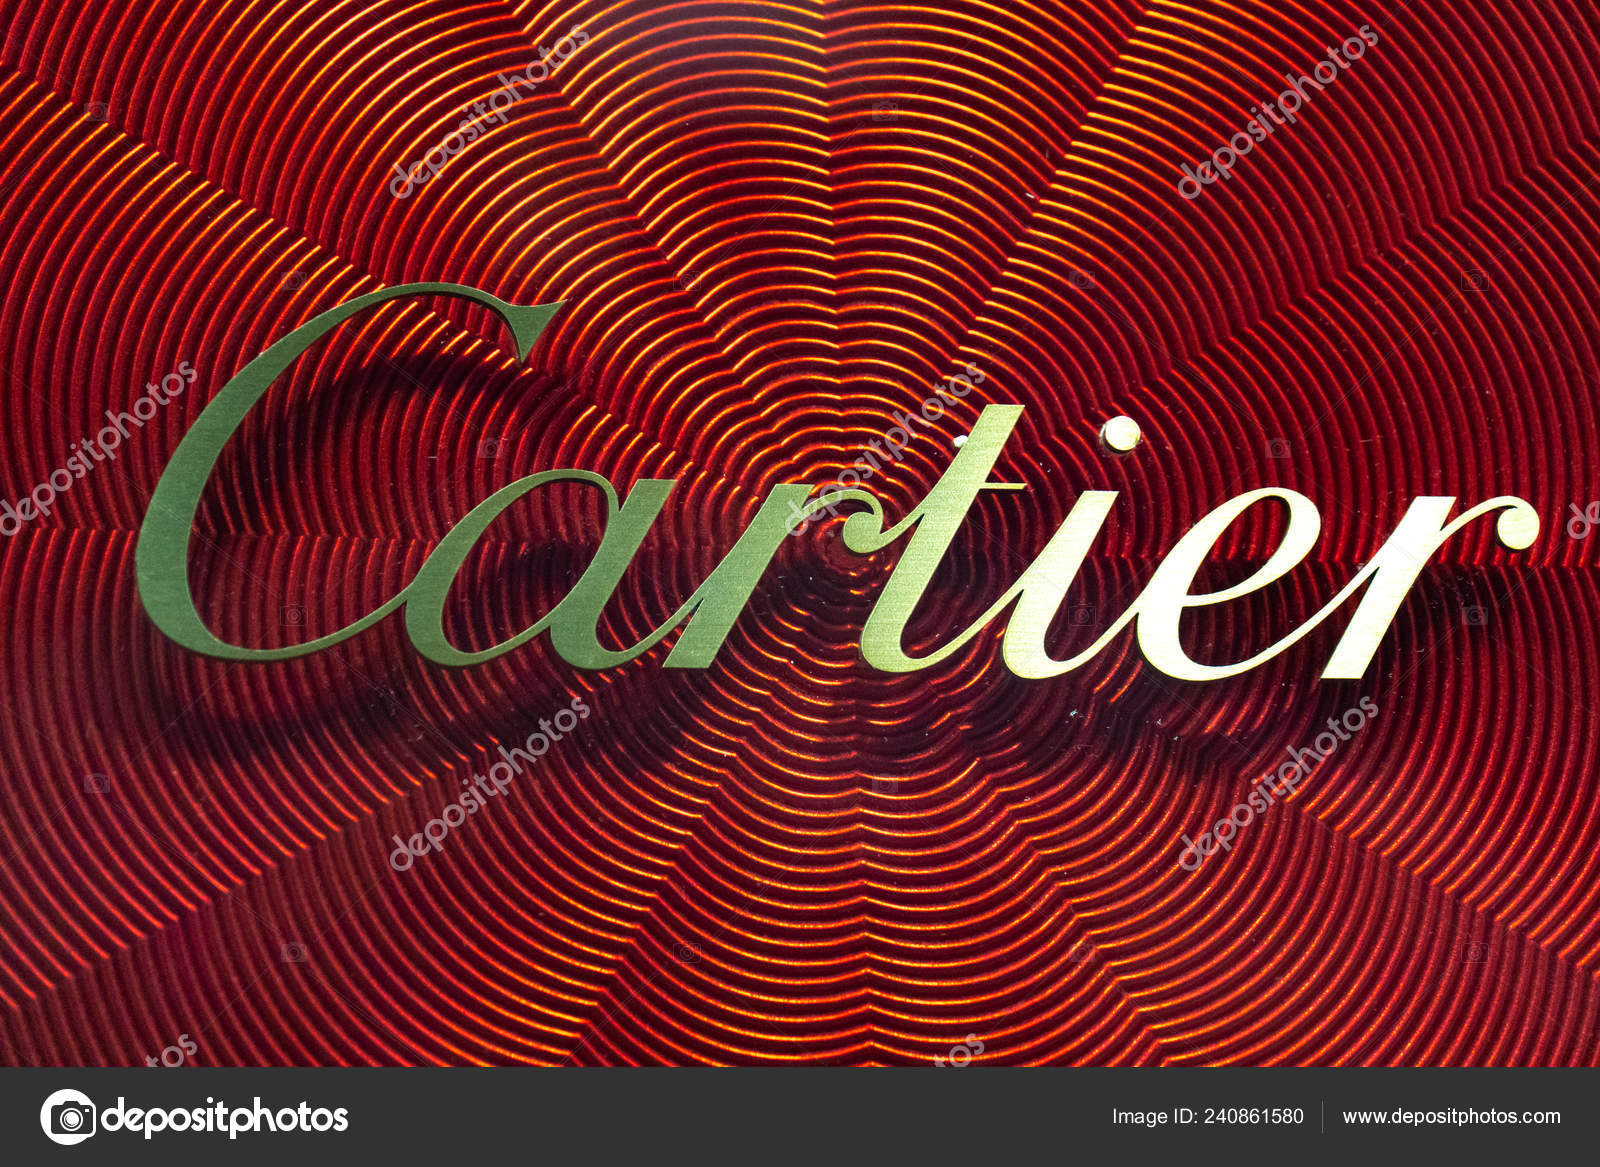 cartier company logo